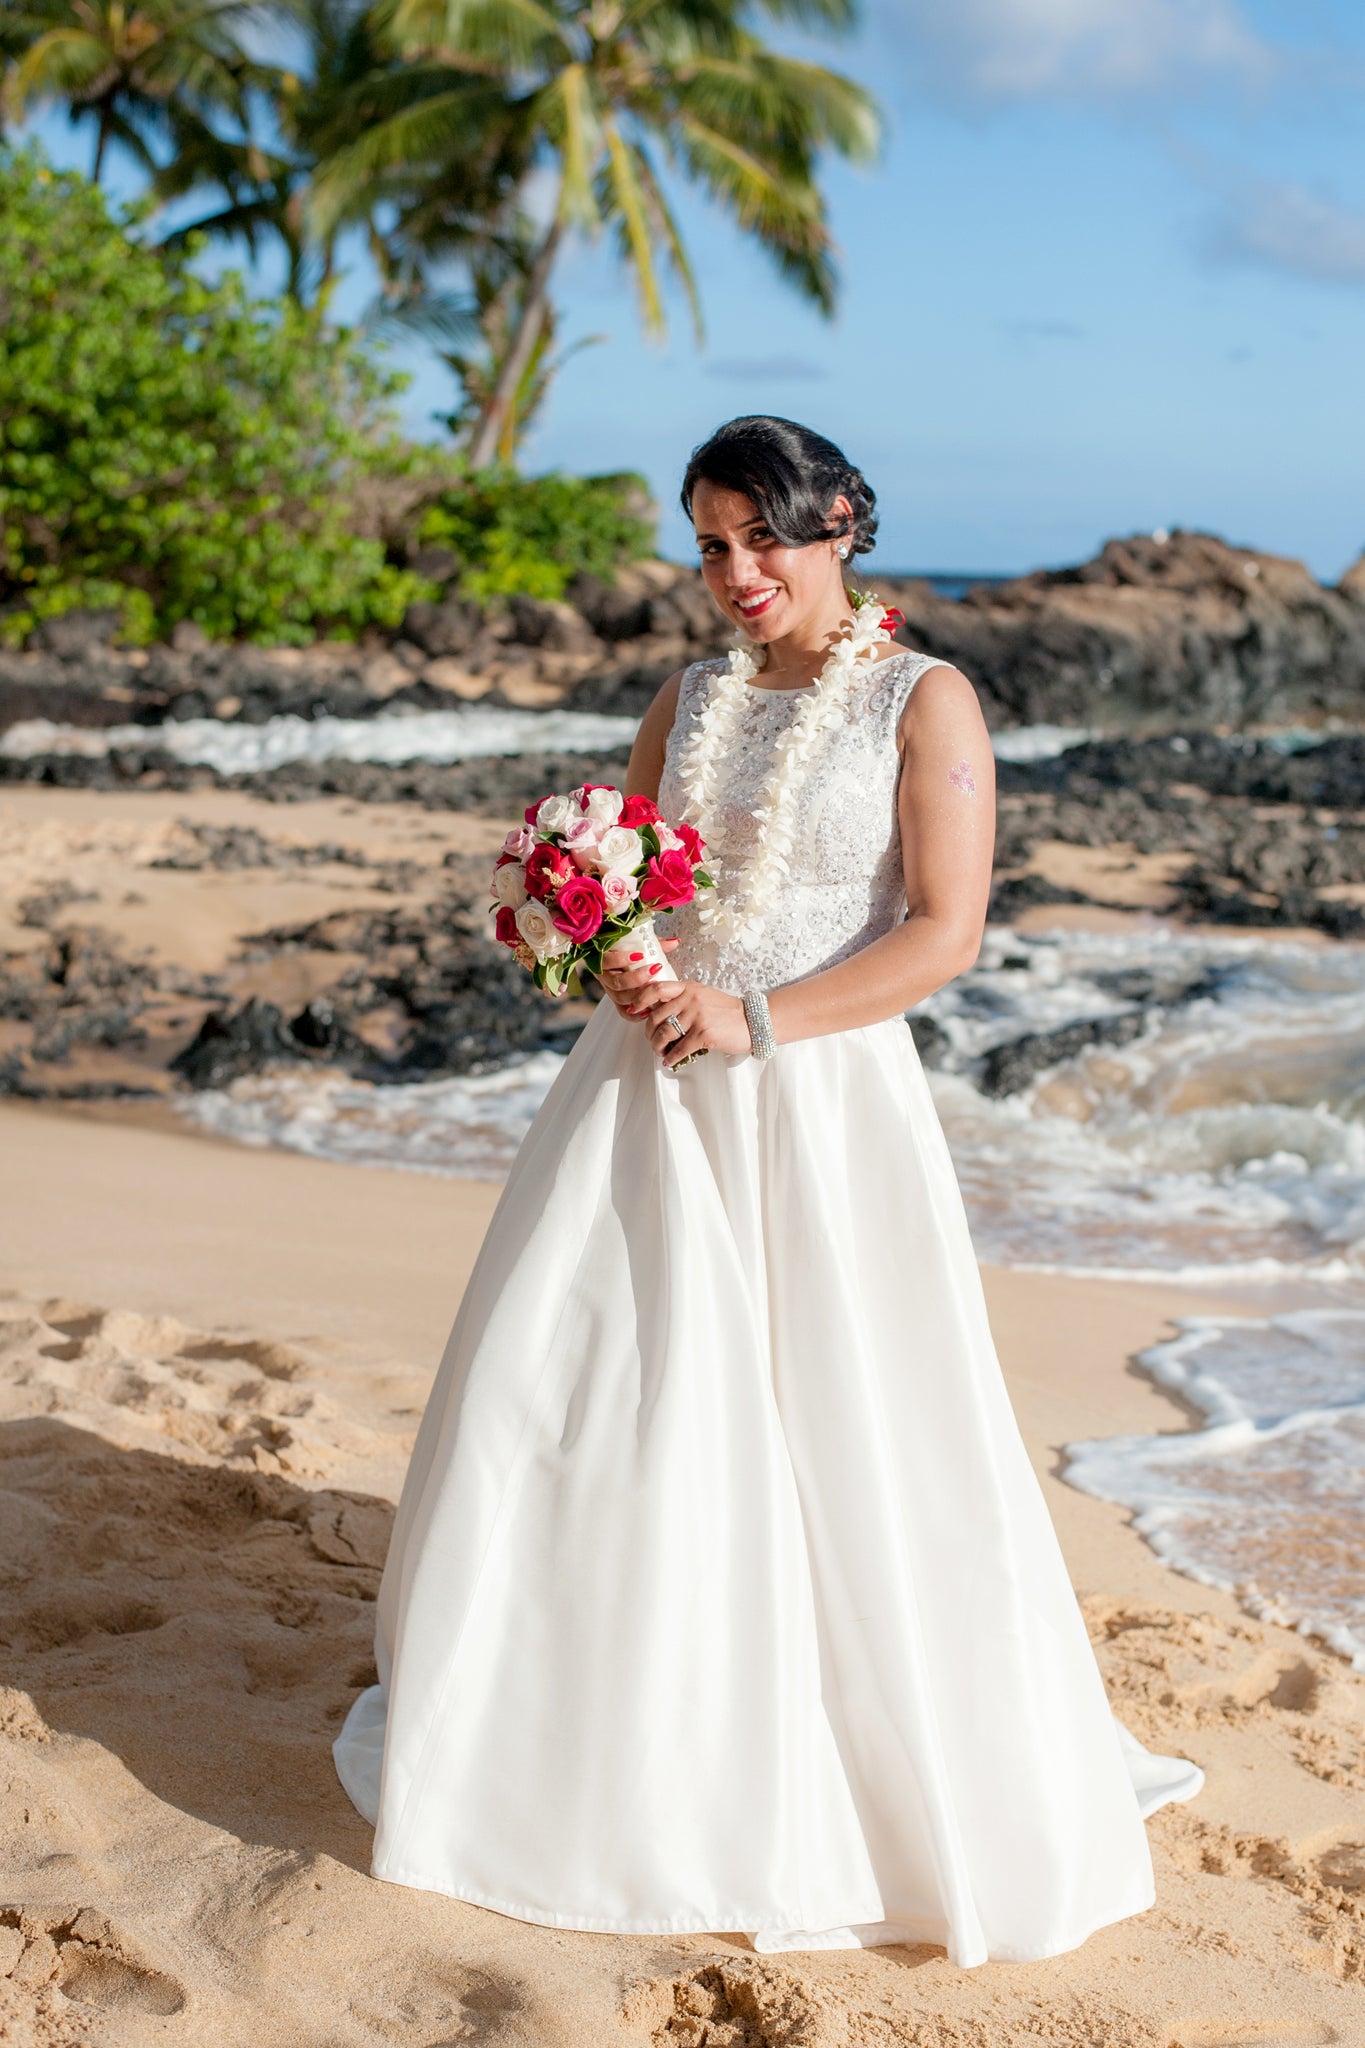 Bride poses on a beach in Maui, Hawaii